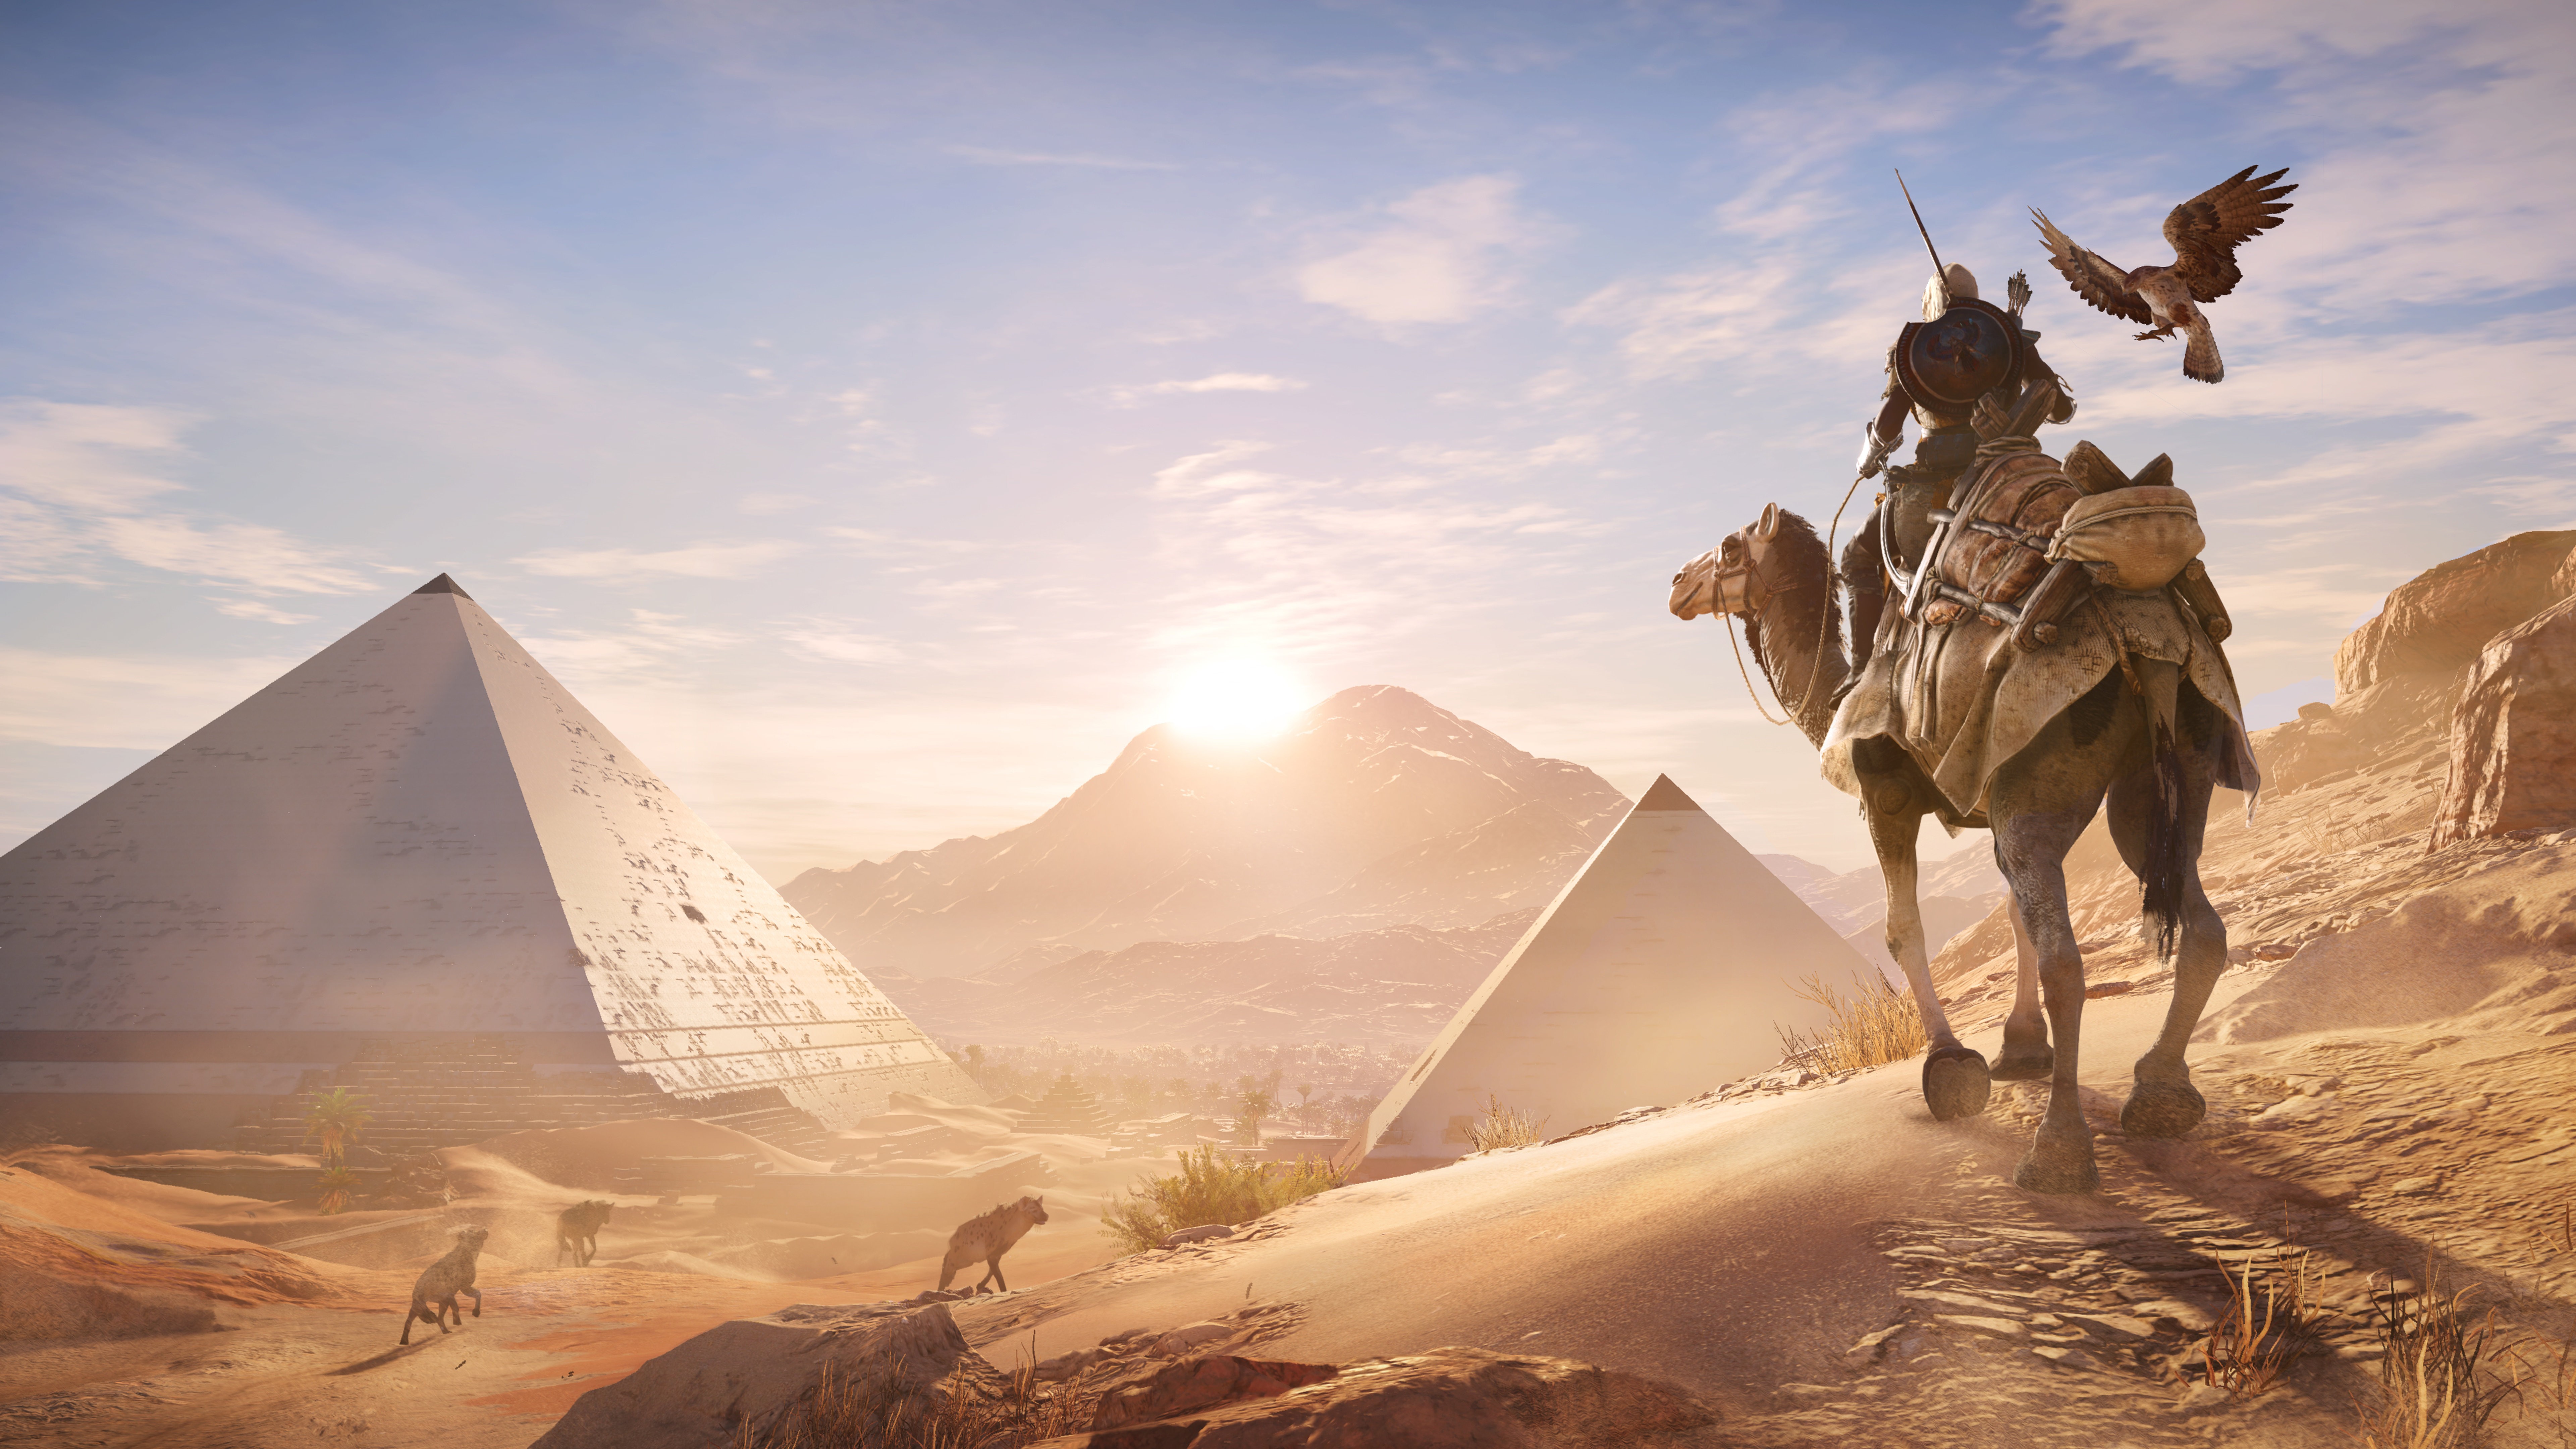 Assassins Creed Origins Pyramids E3 Concept Art, HD Games, 4k Wallpapers, Images, Backgrounds